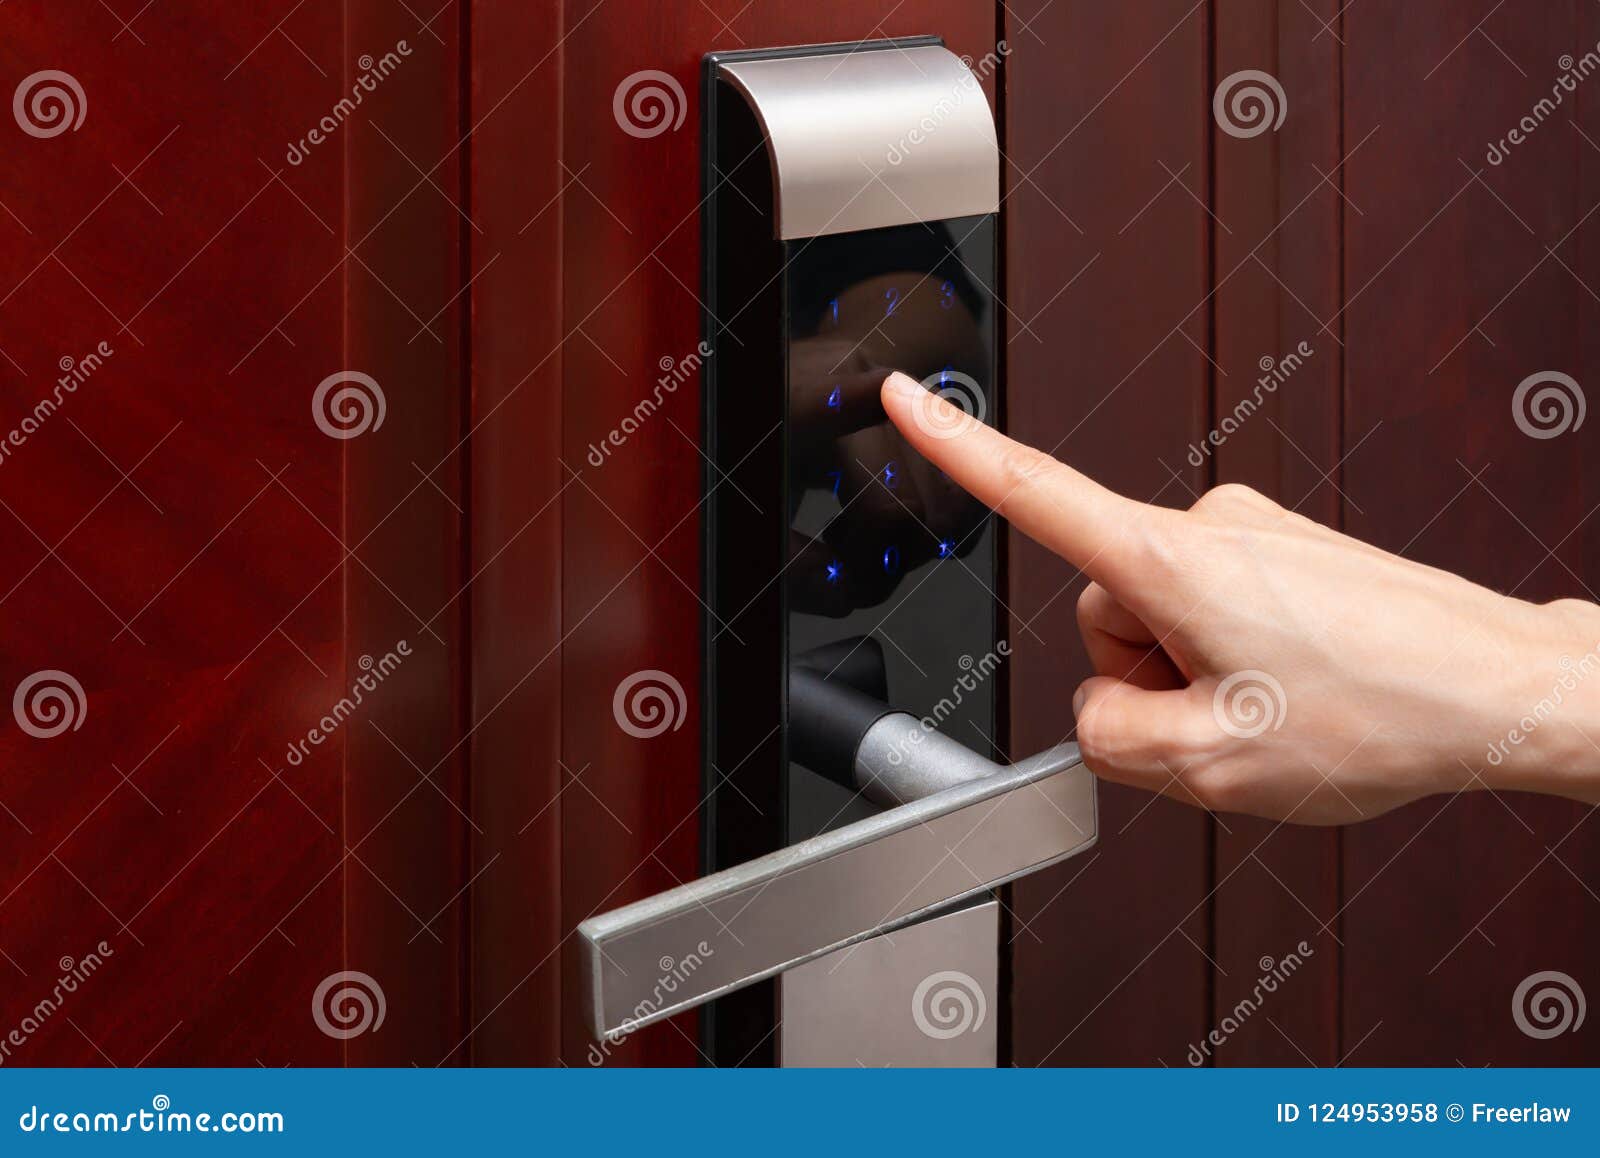 lady inputing passwords on electronic door lock